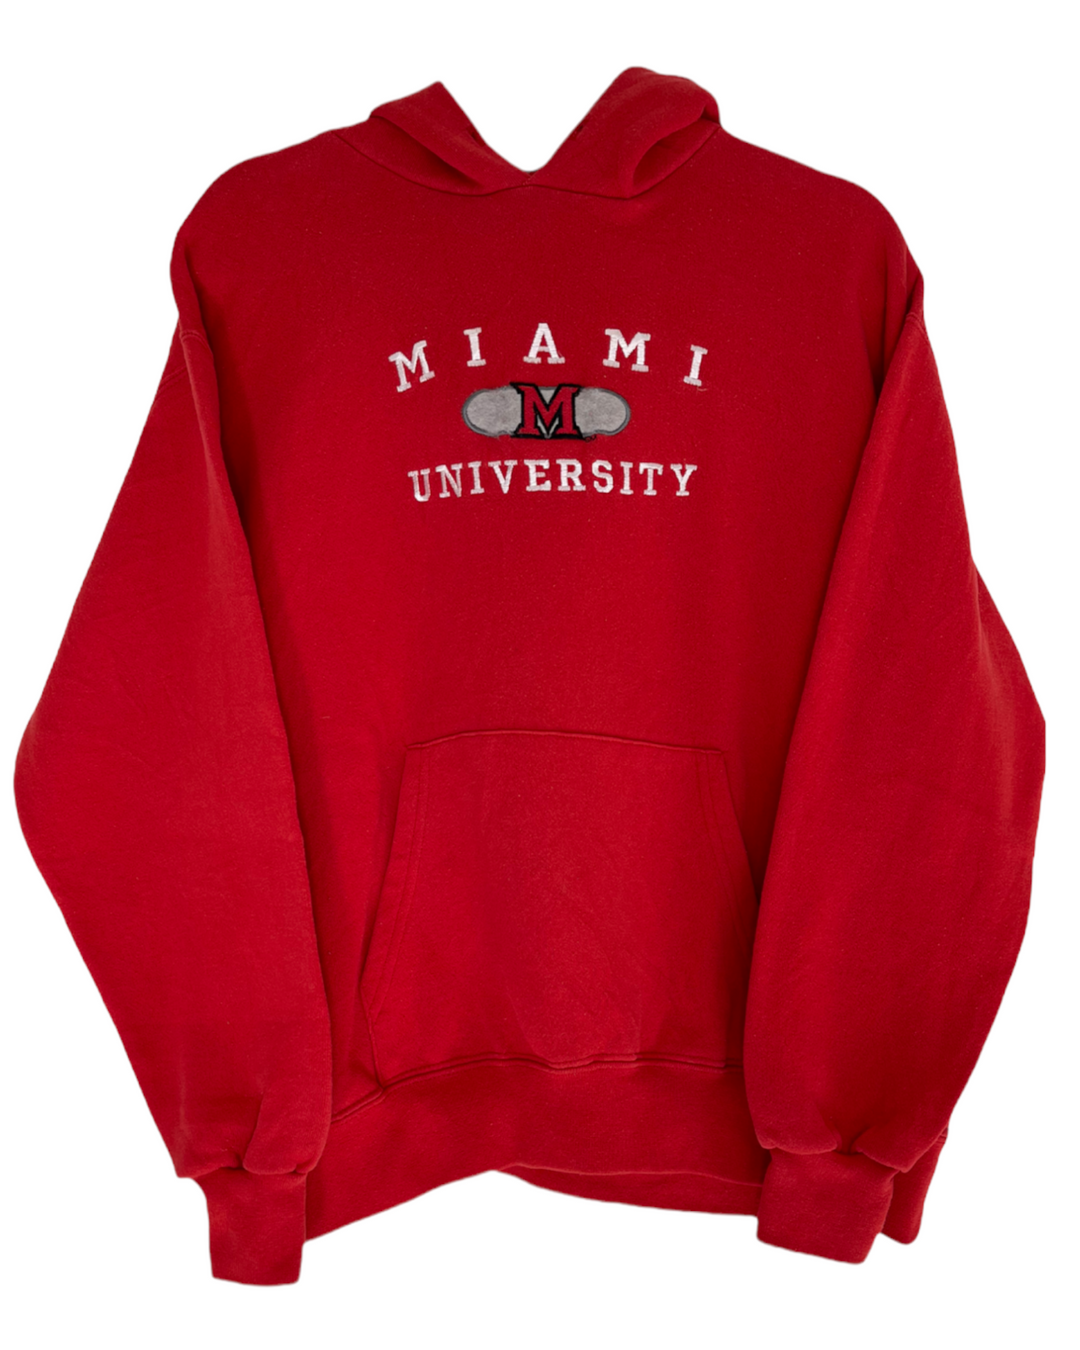 Miami University Vintage Sweatshirt